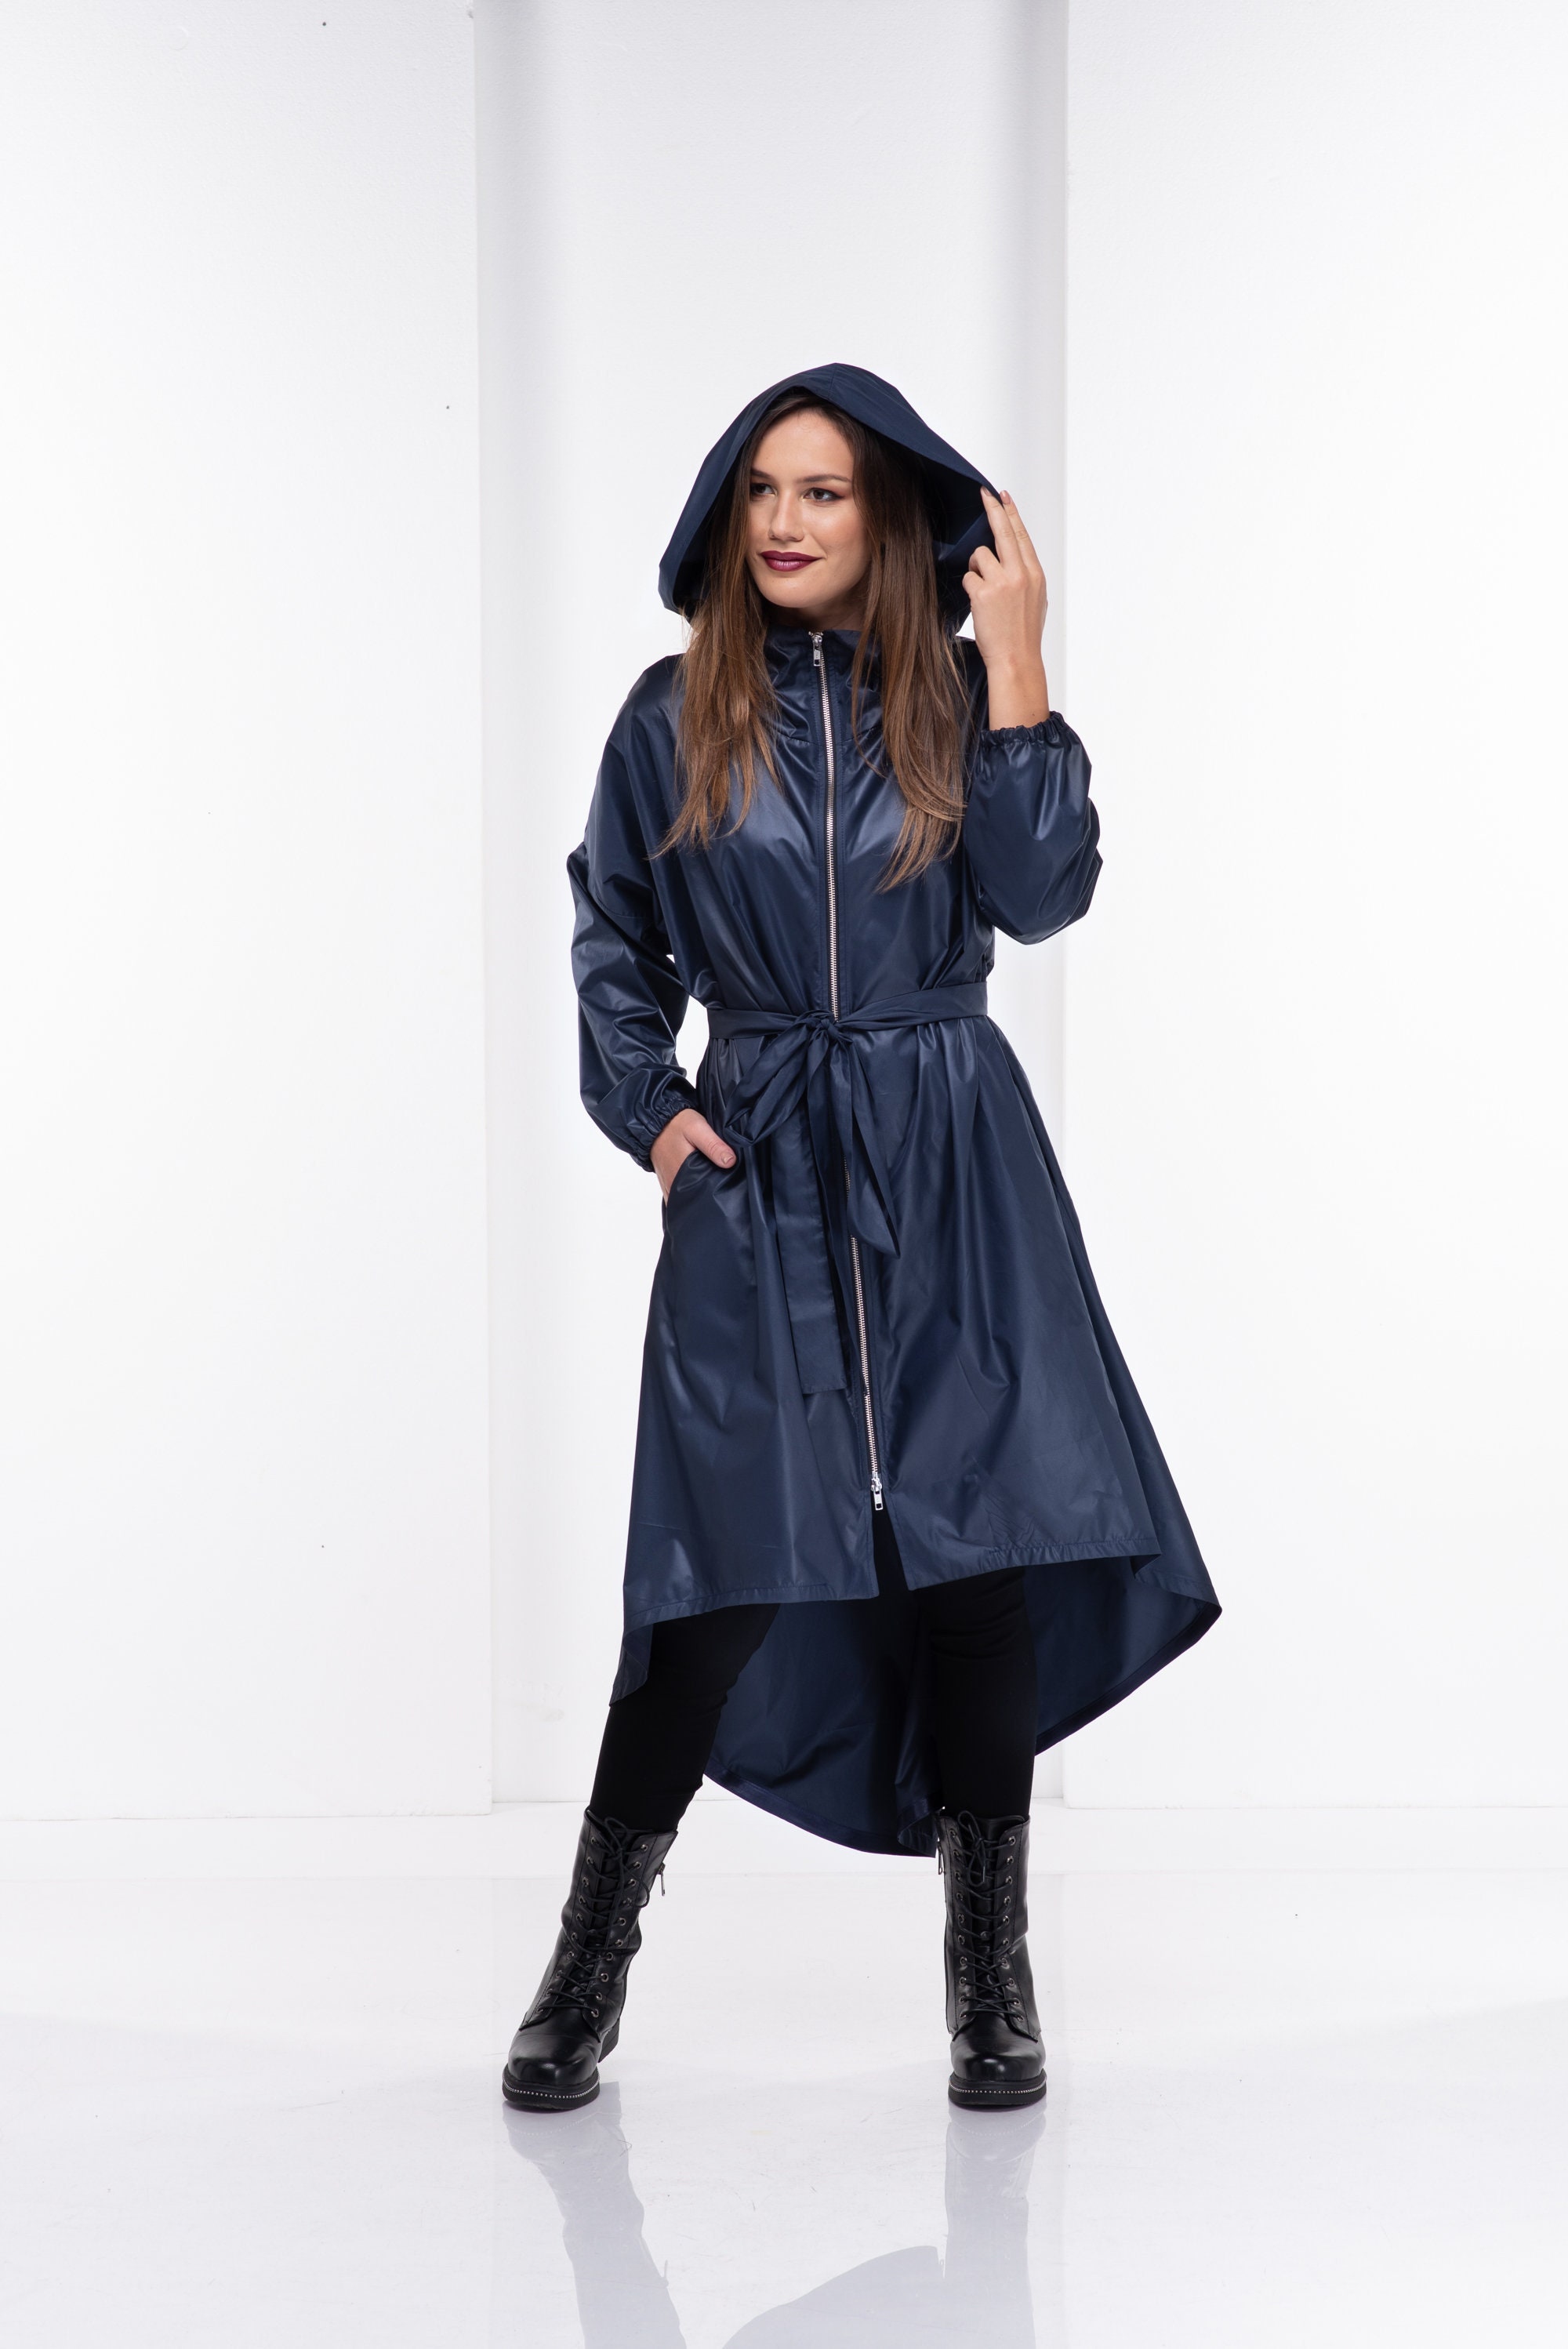 Capa de lluvia de talla grande, Poncho de lluvia para mujer, impermeable  con capucha, chaqueta gótica de talla grande, ropa futurista -  México